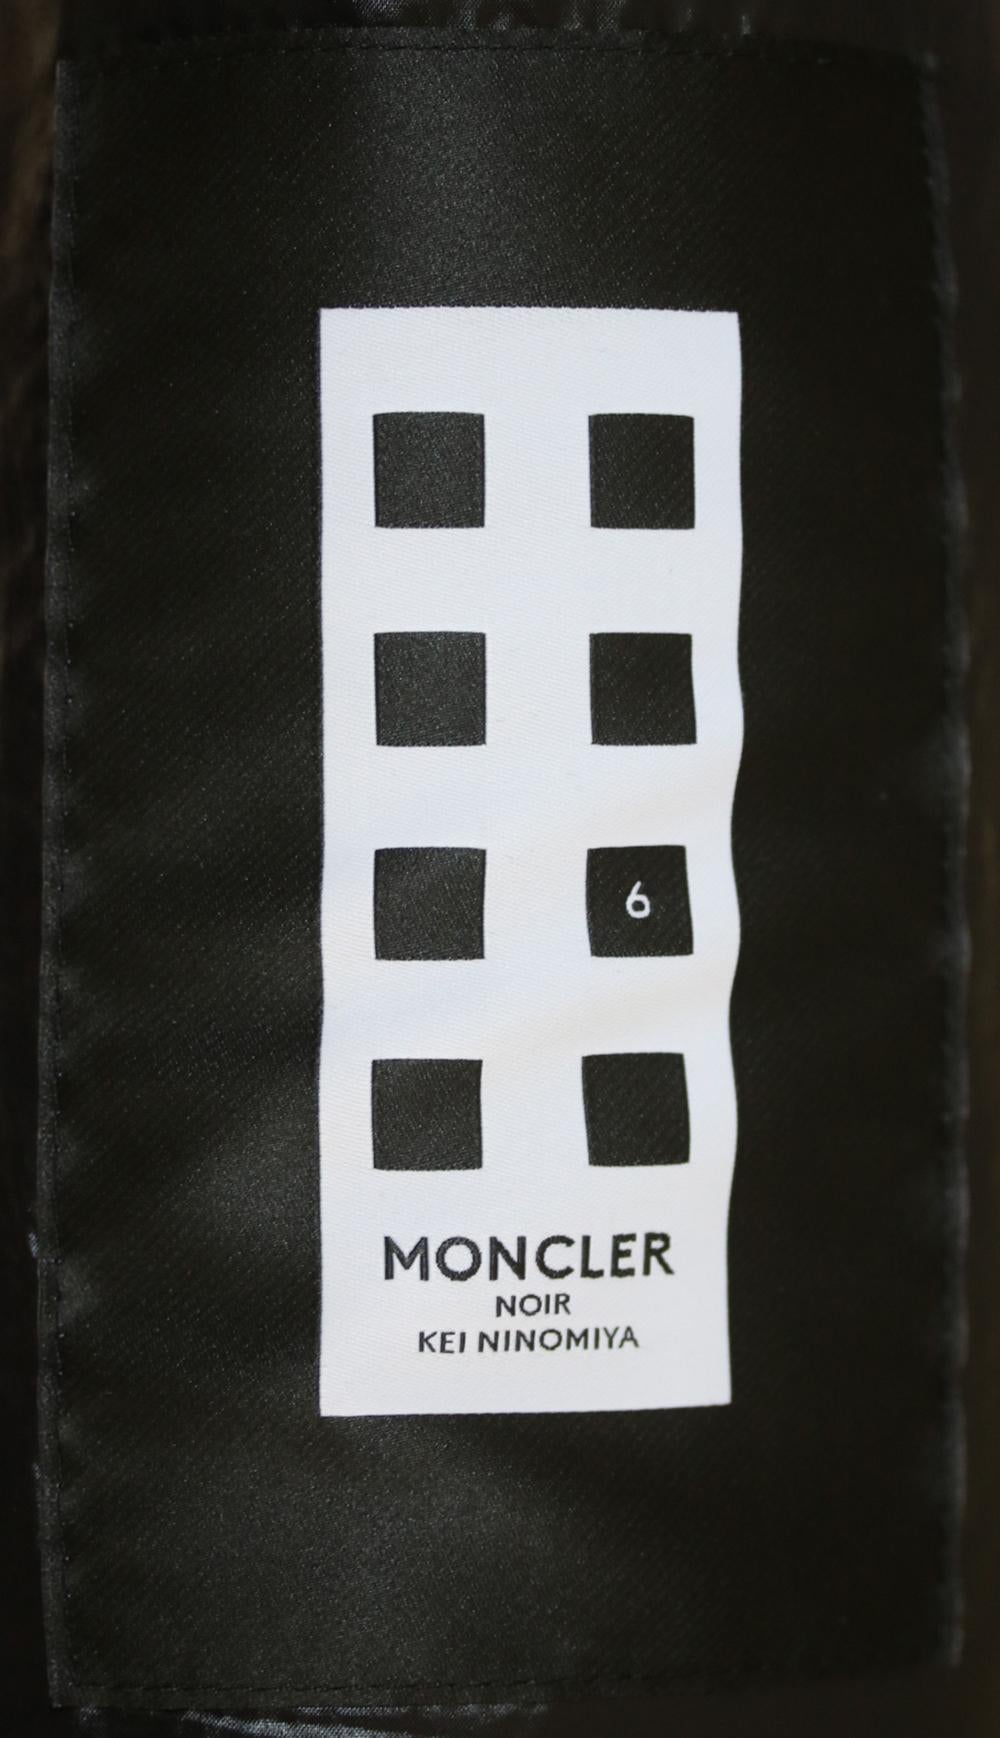 Moncler Genius + 6 Noir Kei Ninomiya Almandine Quilted Shell Down Jacket 4